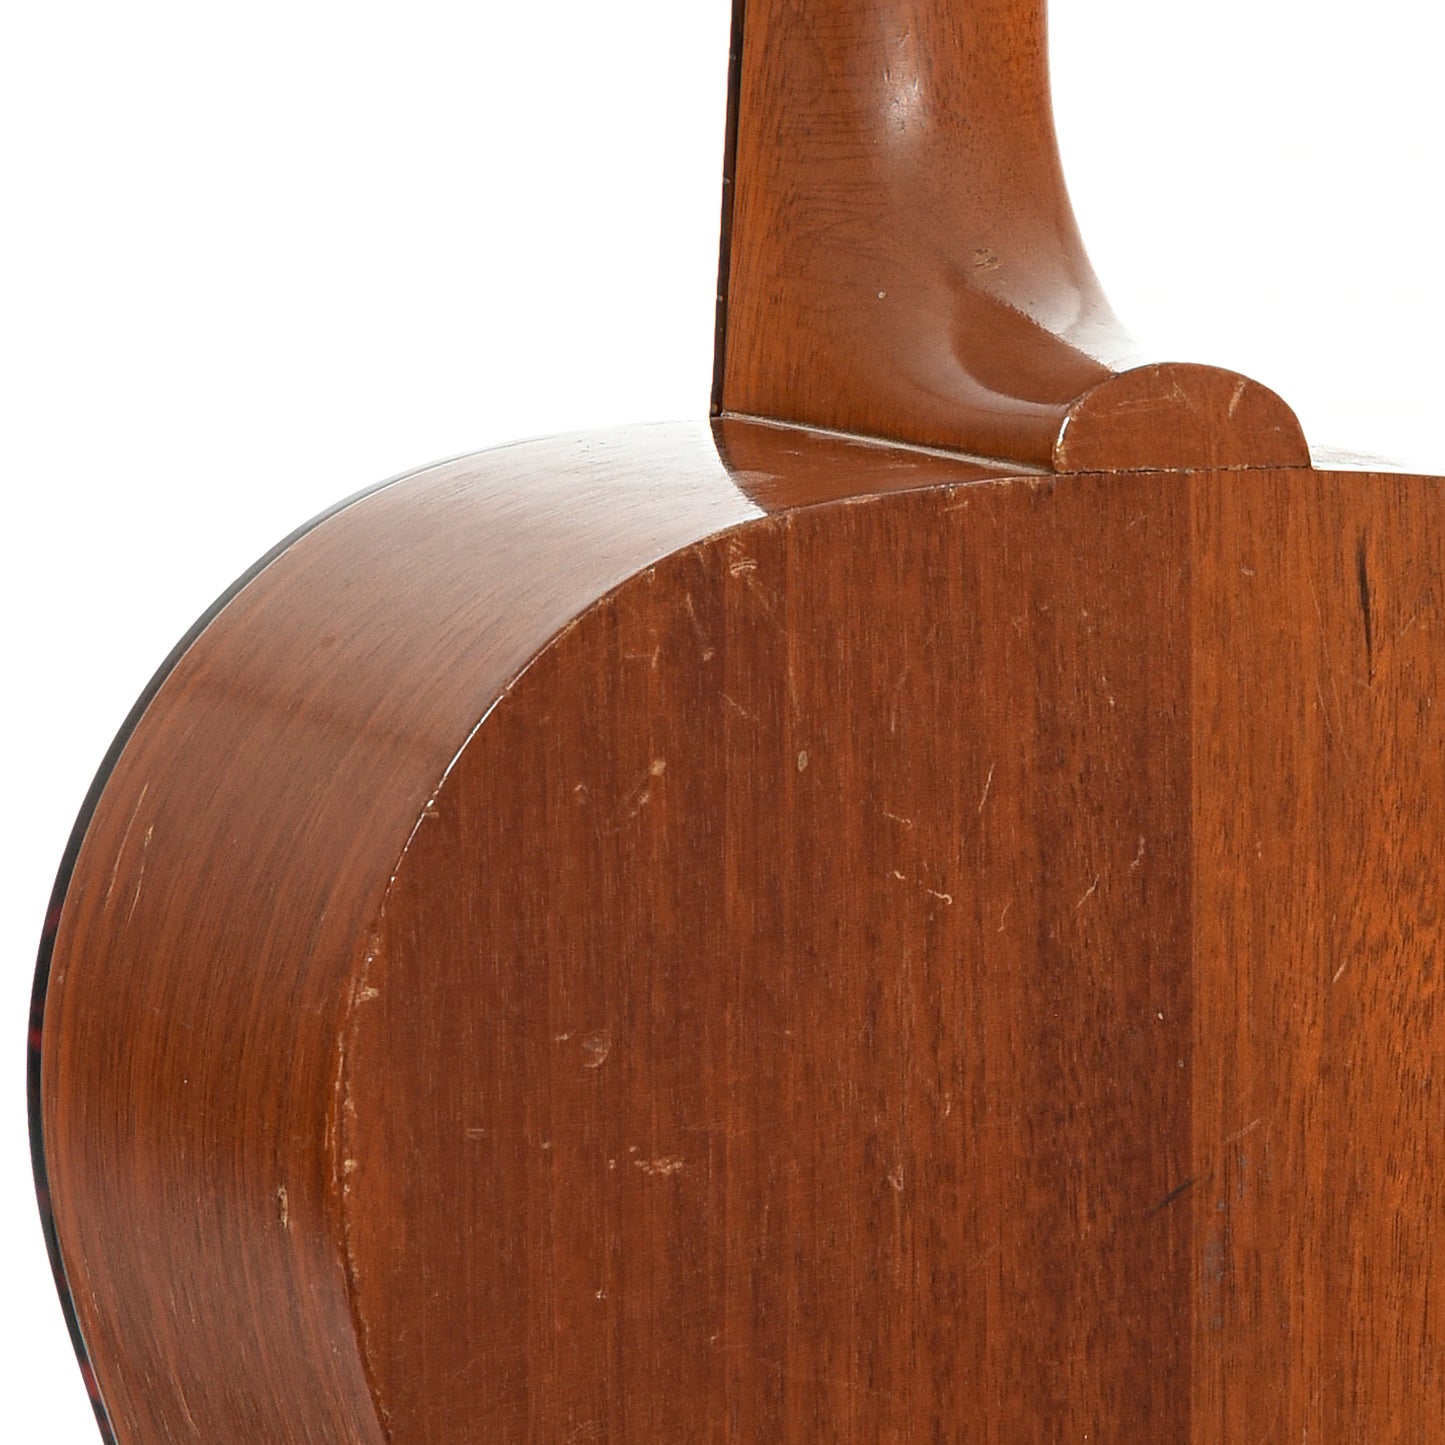 Heel of Gibson LG-0 Acoustic Guitar